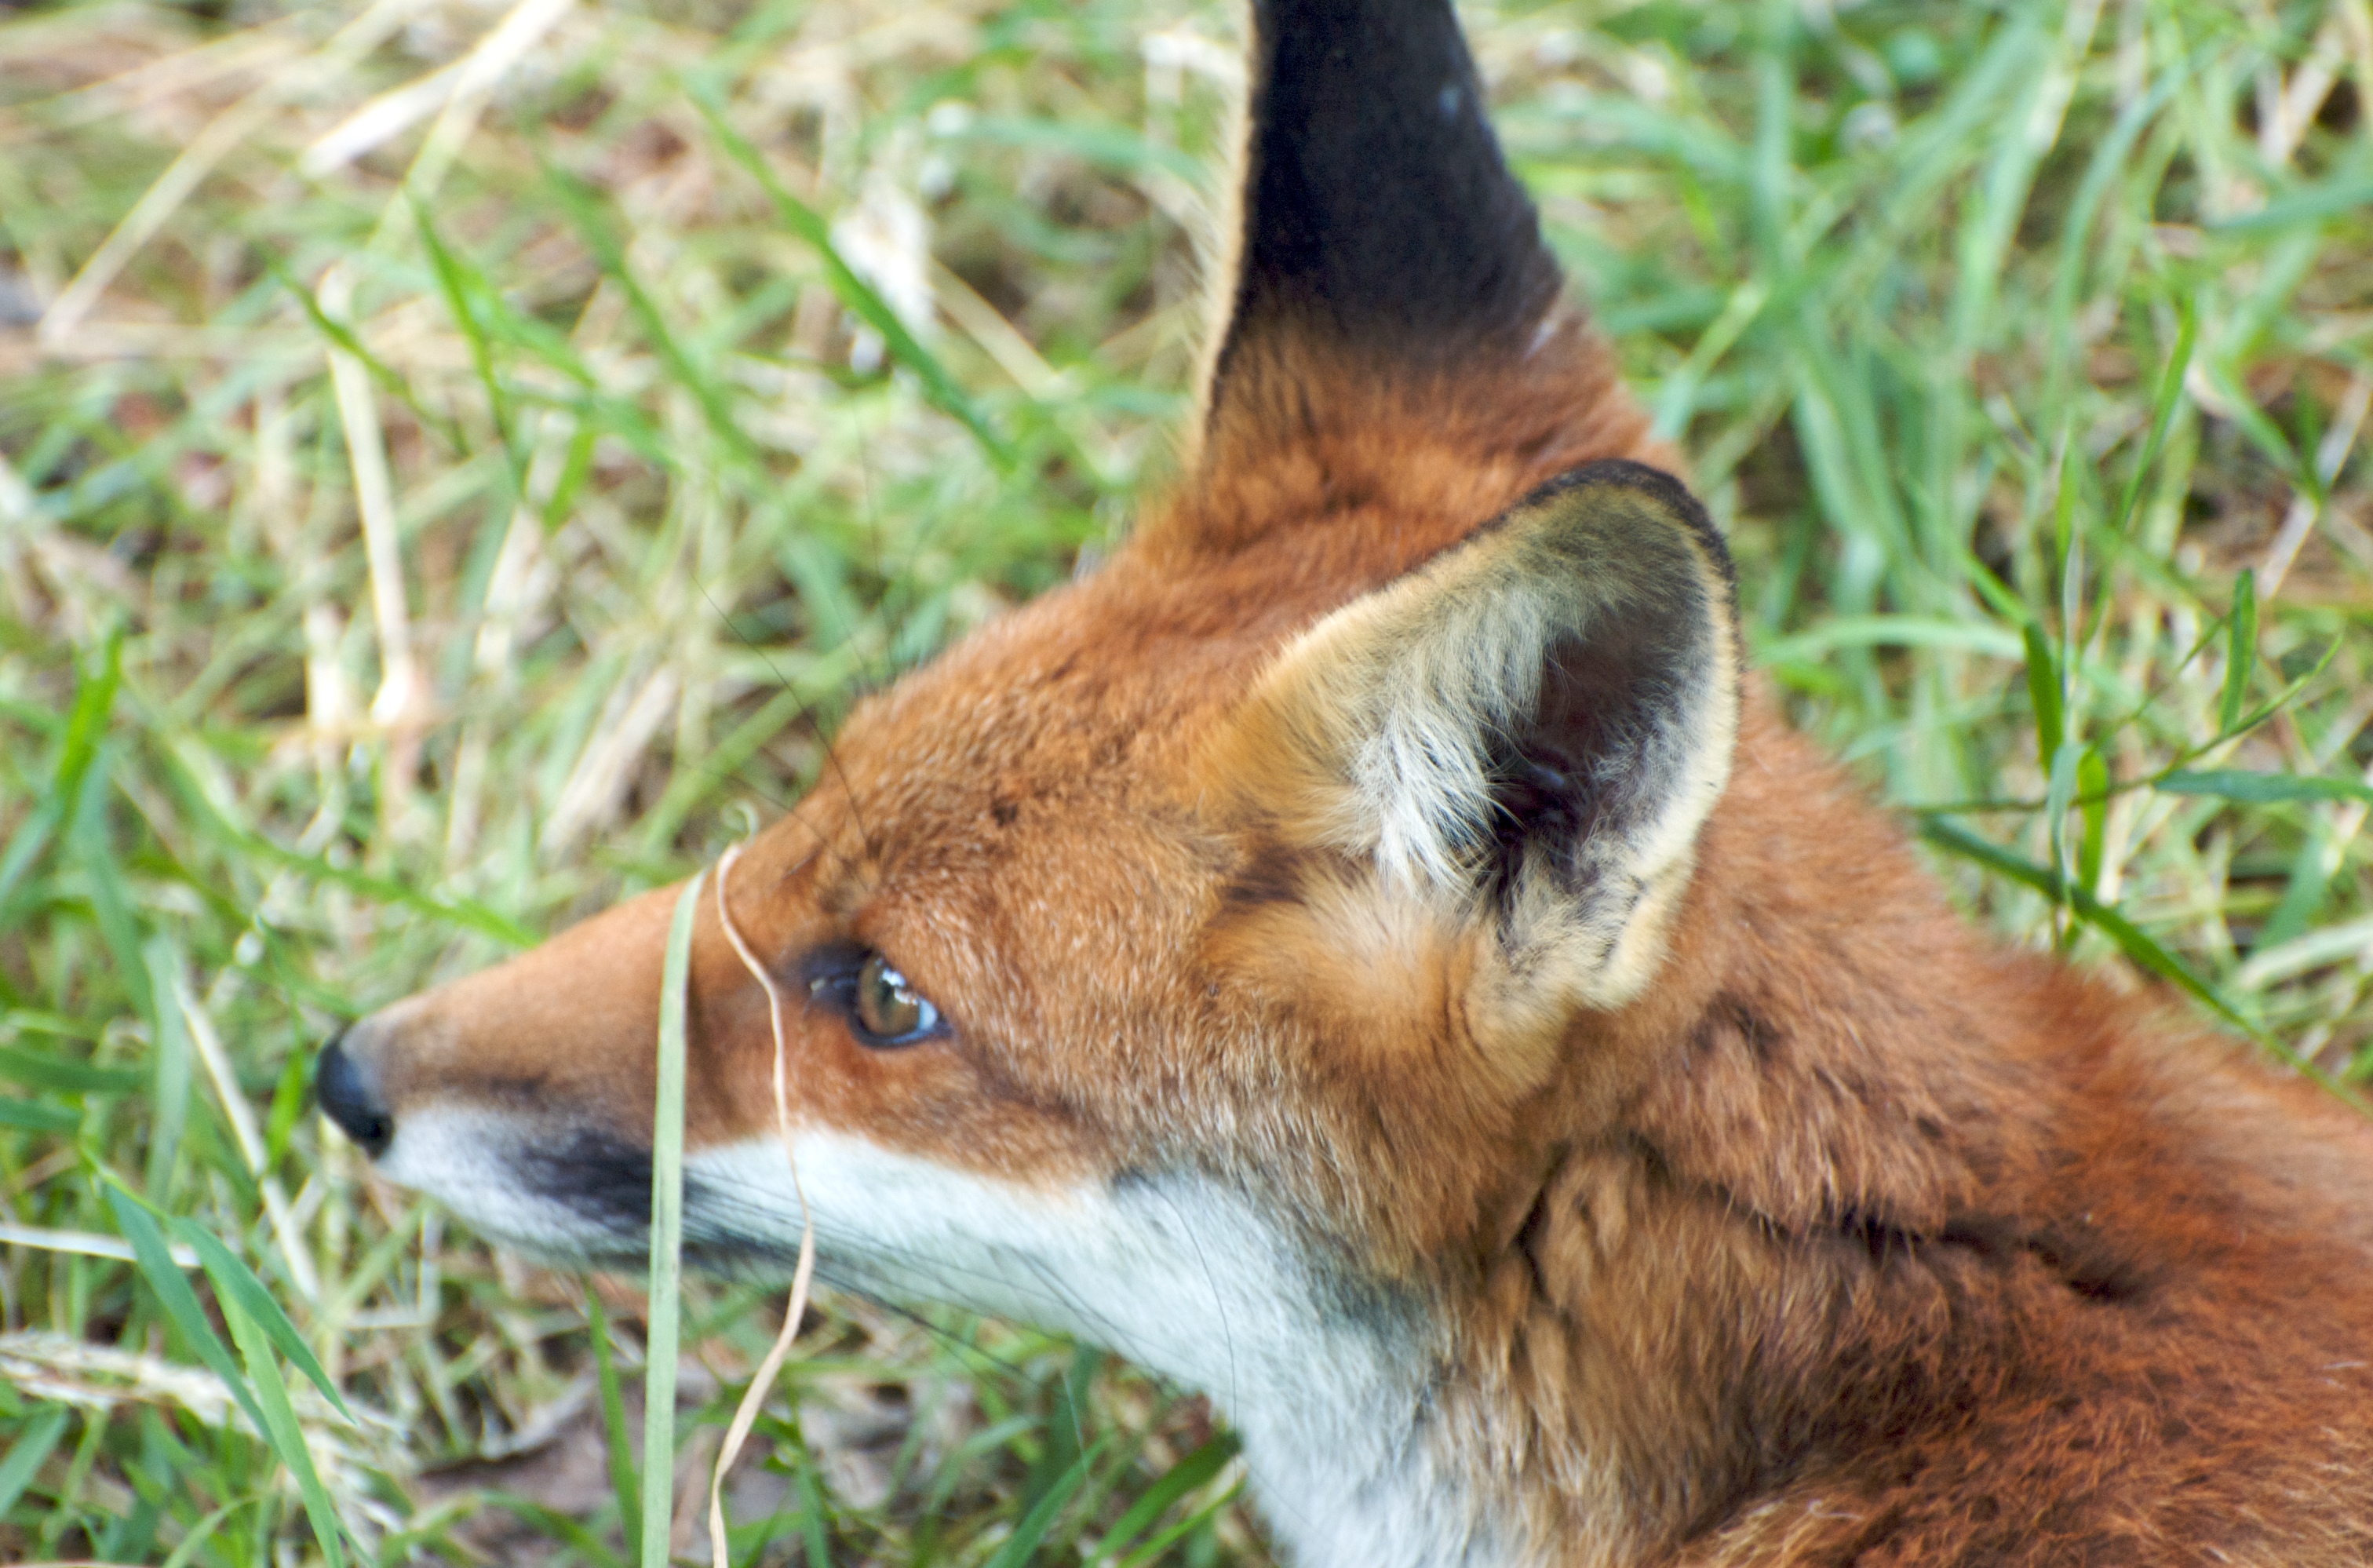 Gray Fox in grass Wallpaper. More foxes